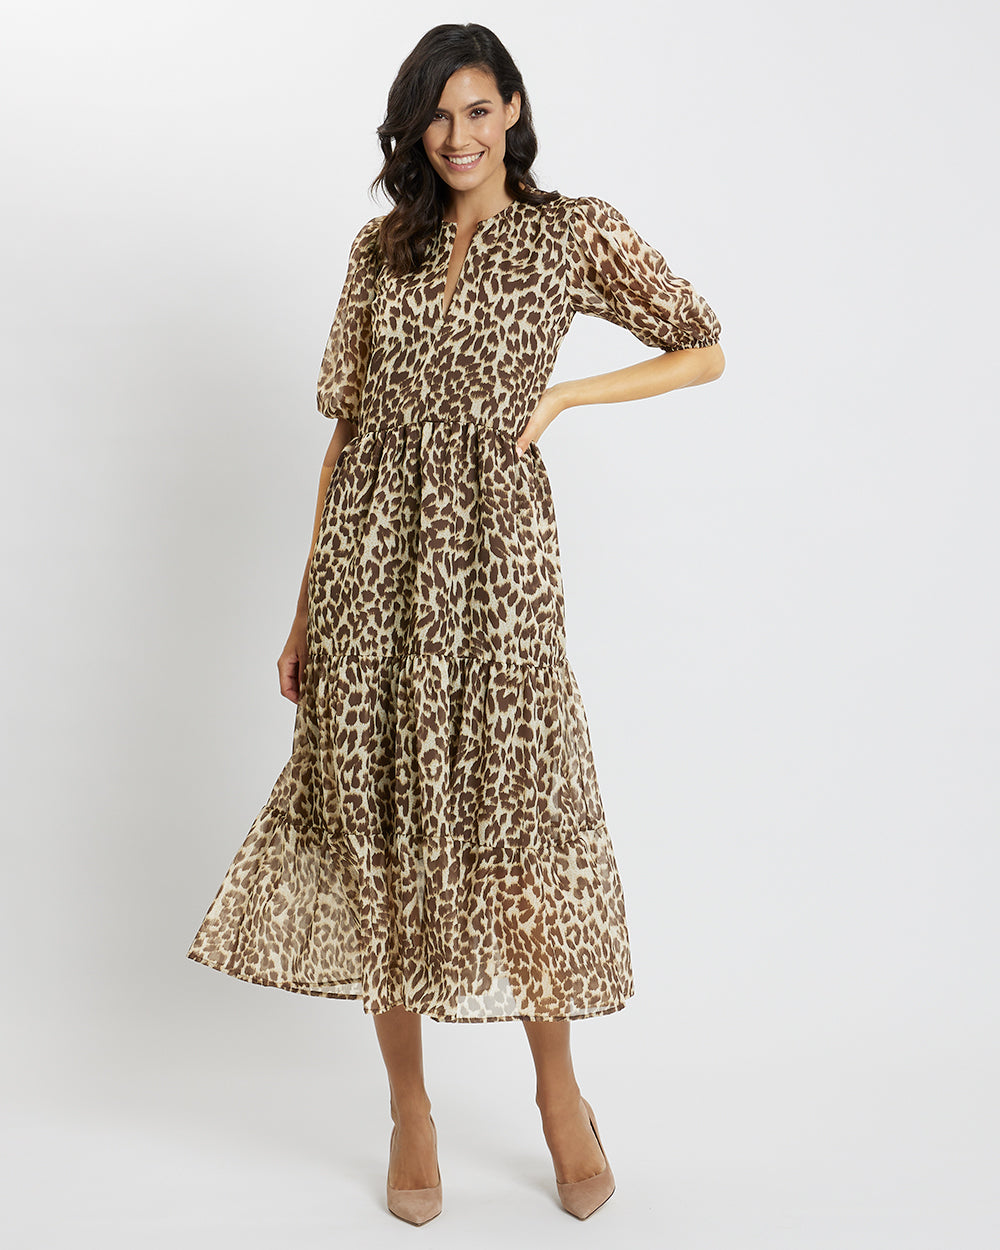 Jordana Chiffon Dress in Speckled Cheetah| Jude Connally